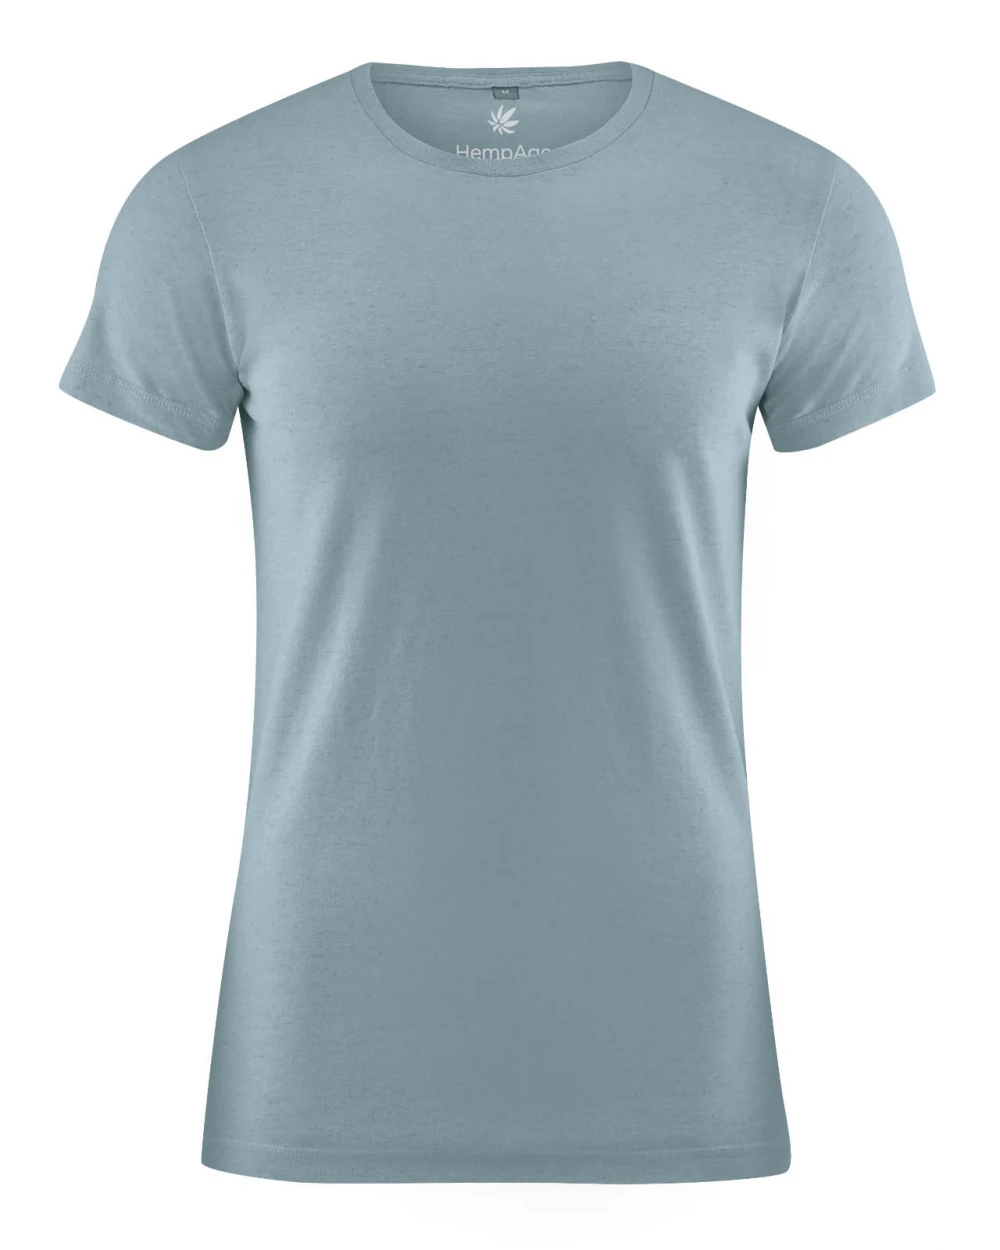 Men's Slim Fit T-shirt in Aloe Organic Cotton and Hemp